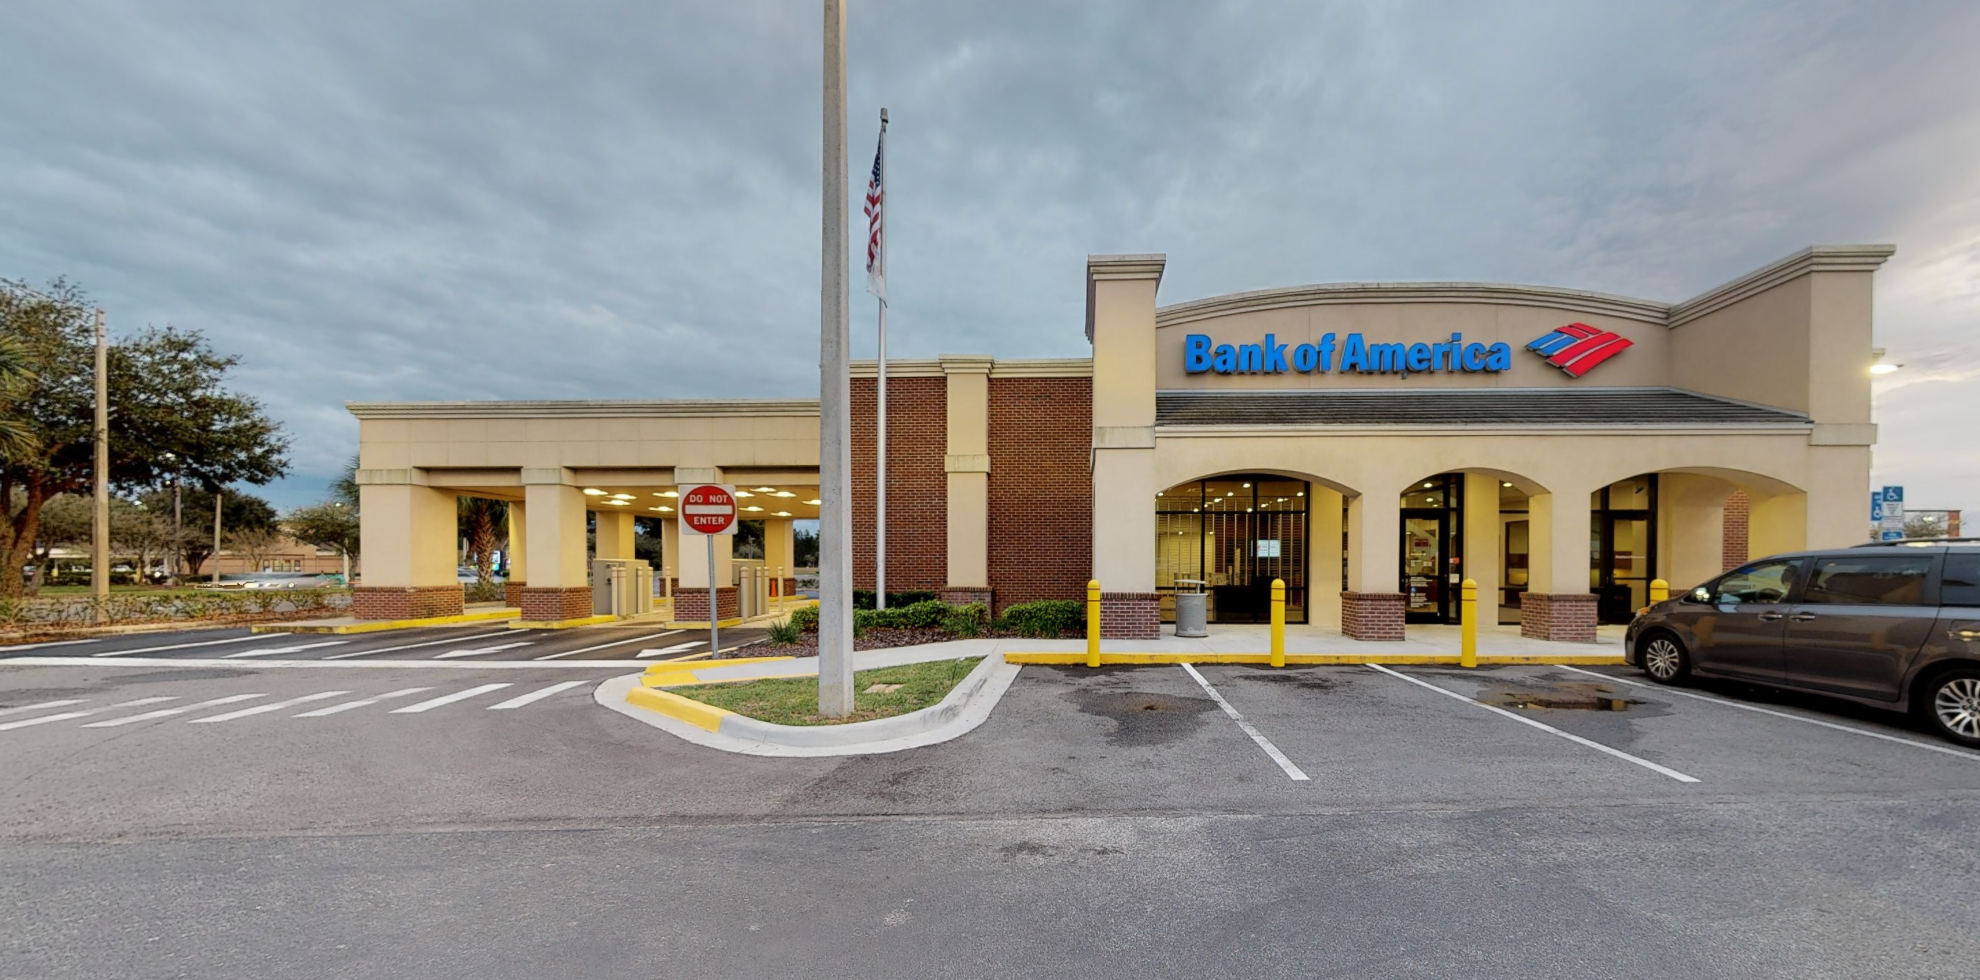 Bank of America financial center with drive-thru ATM | 8300 Merchants Way, Jacksonville, FL 32222